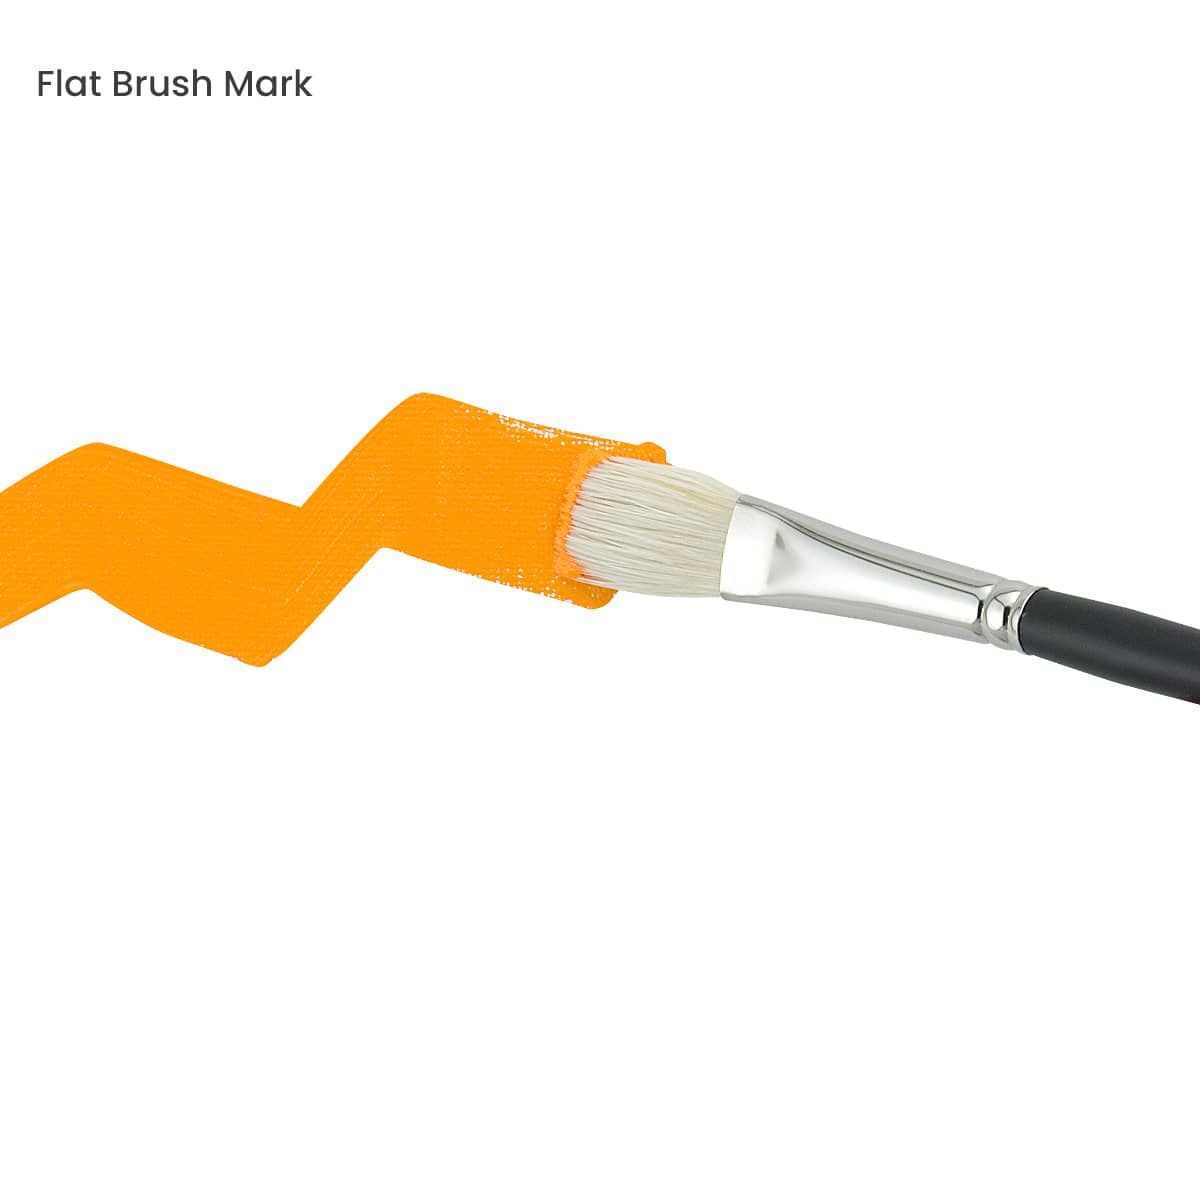 Flat Brush Mark